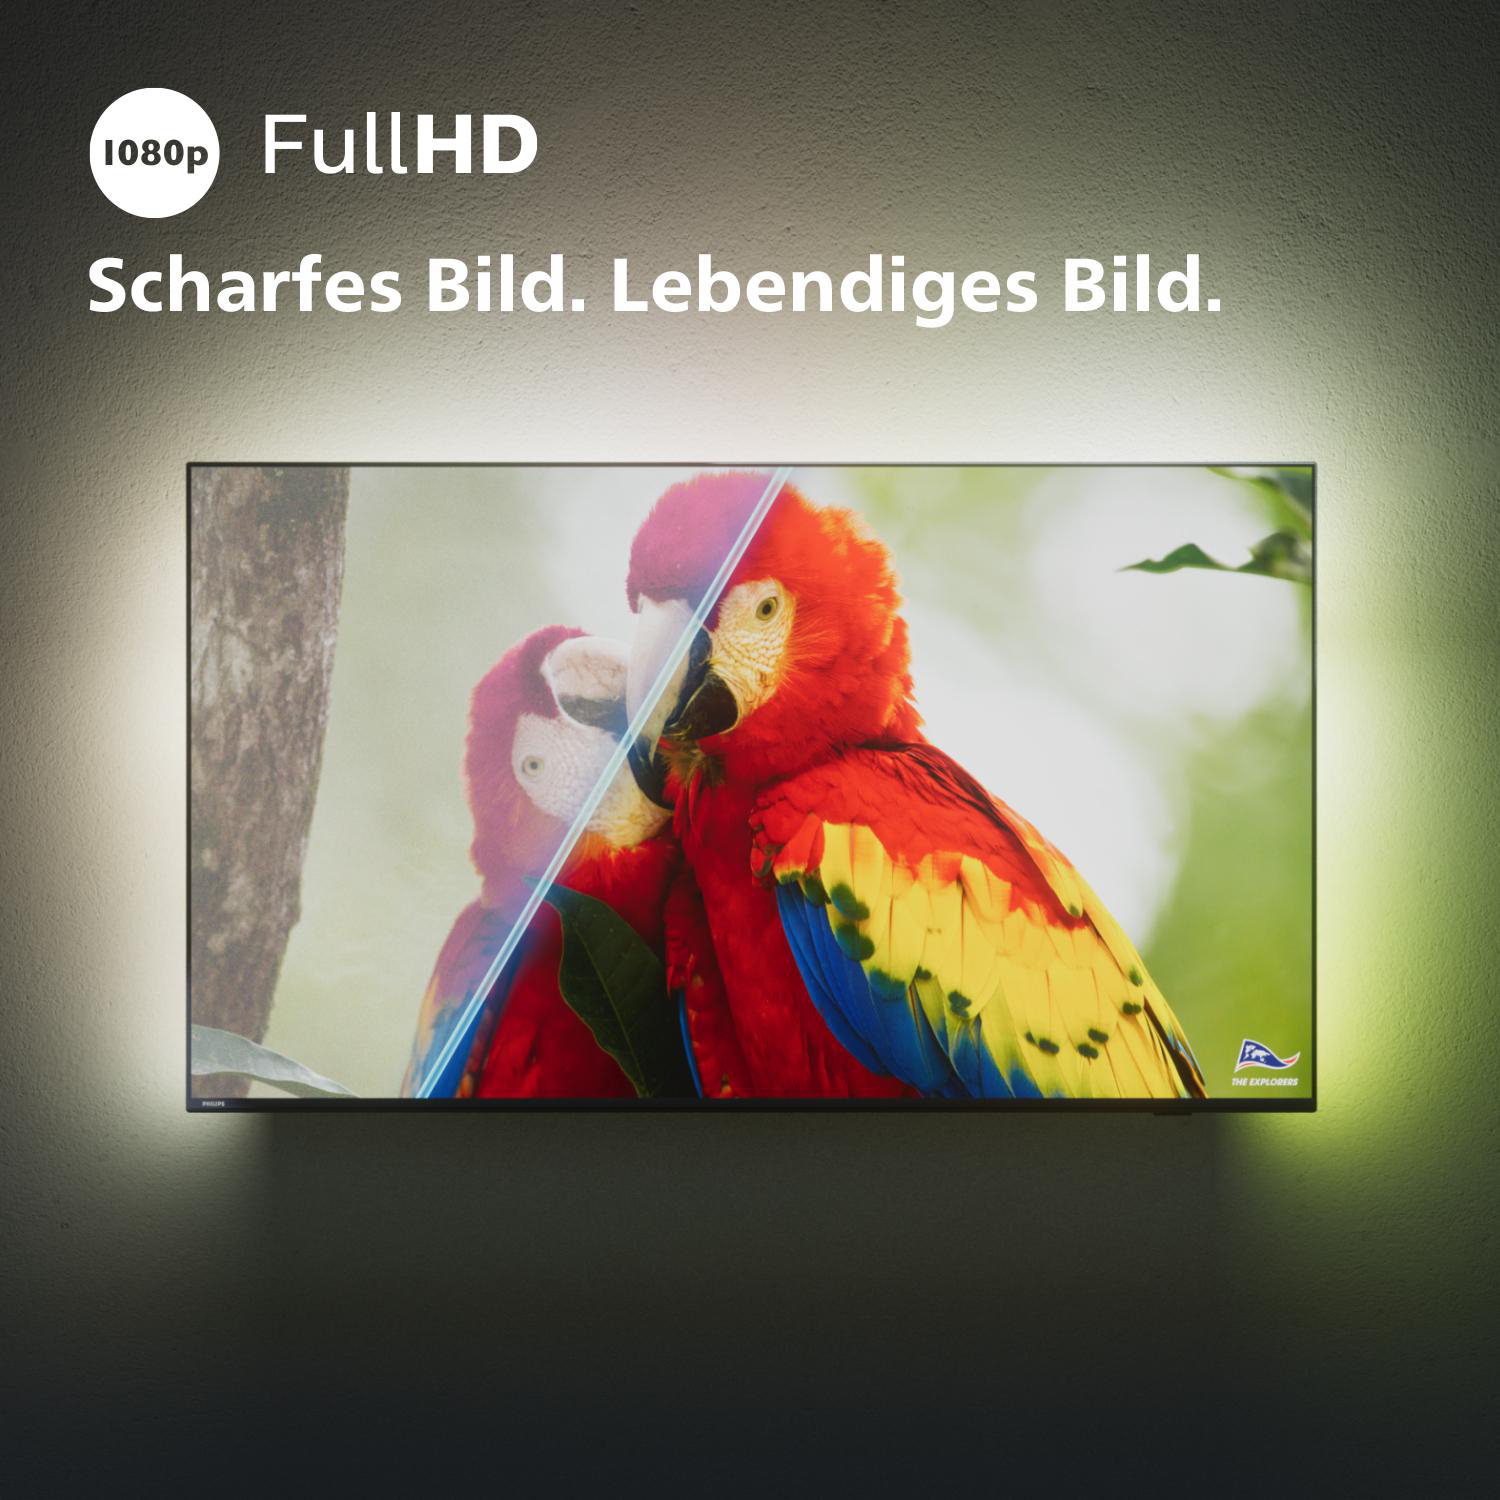 32 TV) cm, Ambilight 80 TV SMART Philips HD Smart PHILIPS (Flat, Full 32PFS6908/12 Zoll LED Ambilight, Full-HD, / TV,